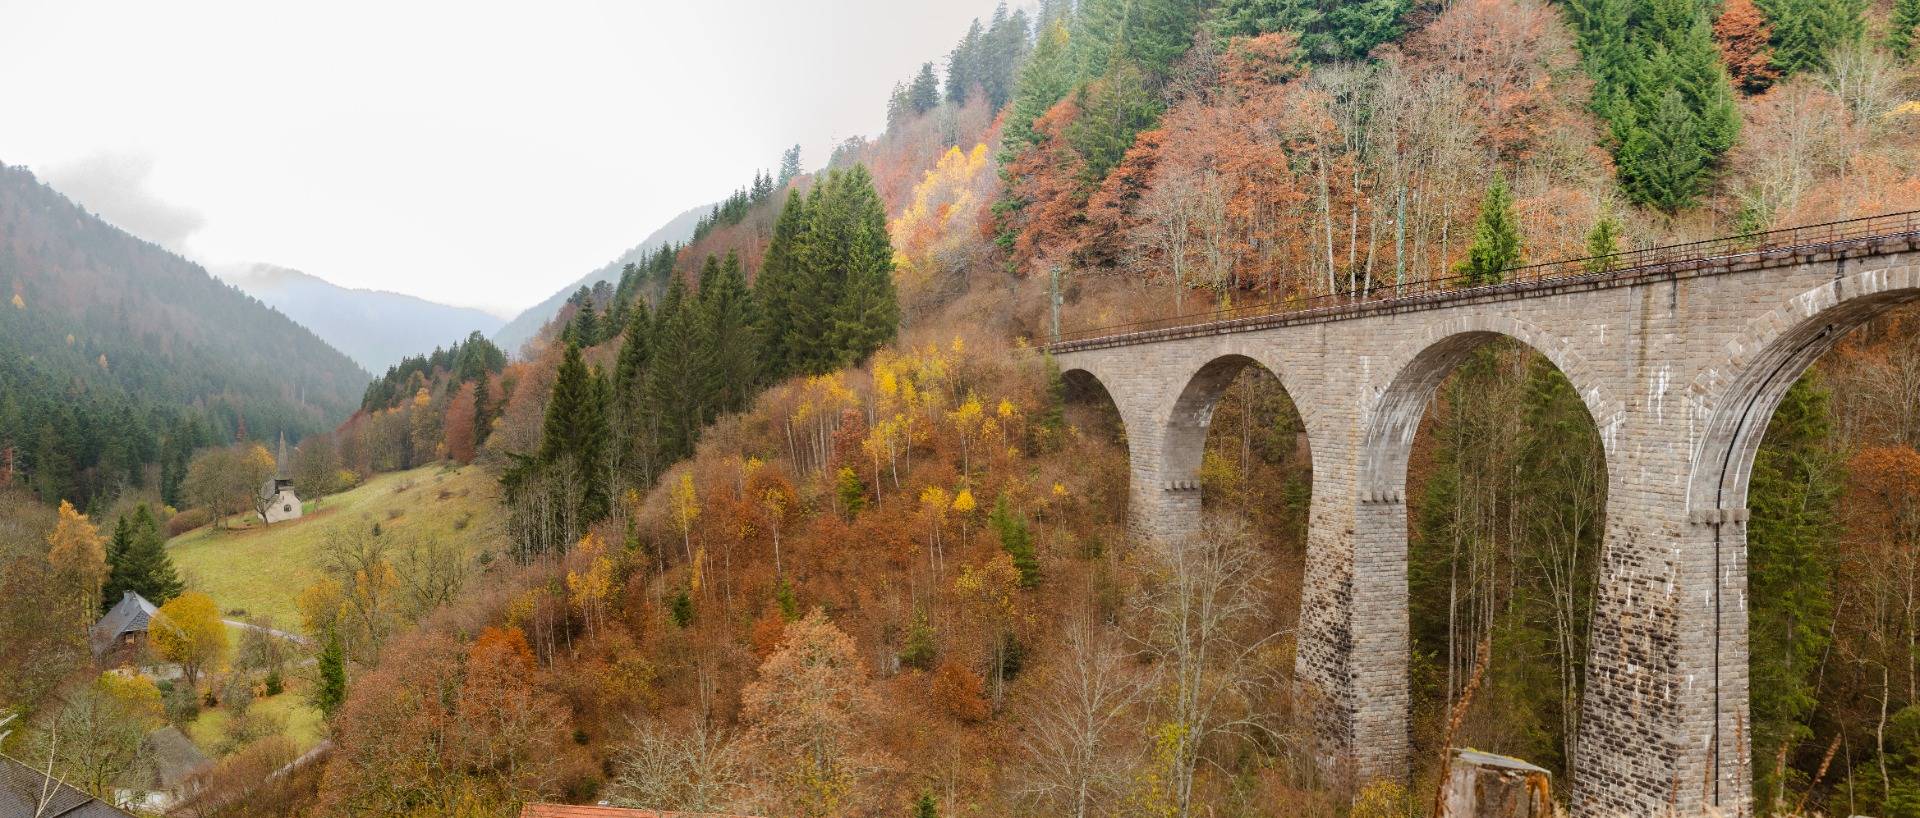 Germany road trip, the Harry Potter bridge!